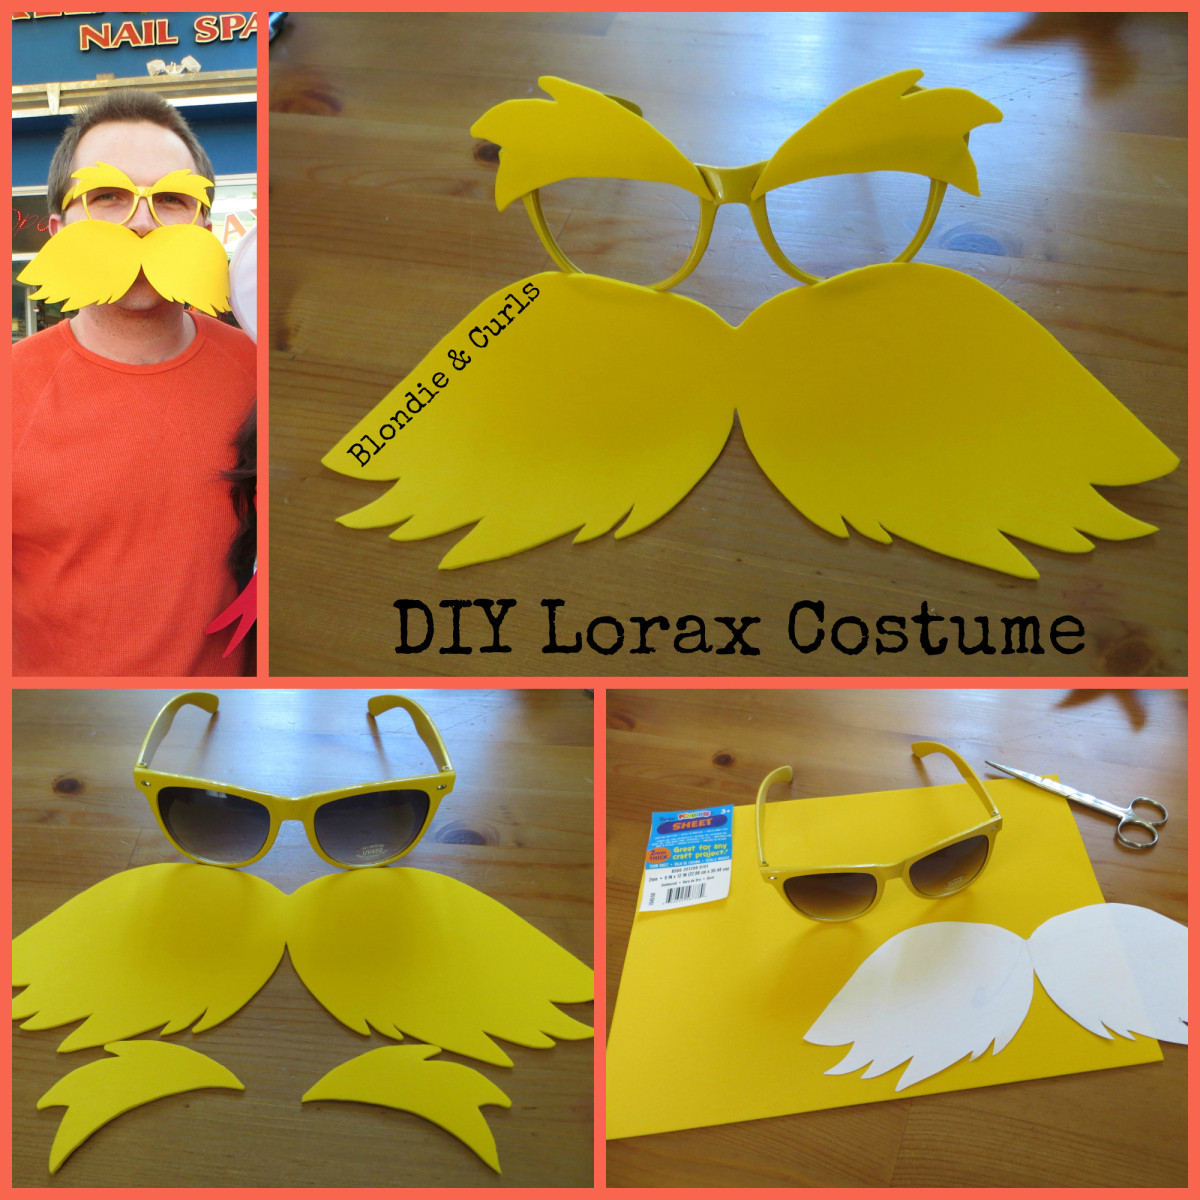 Lorax Costumes DIY
 DIY Lorax Costume